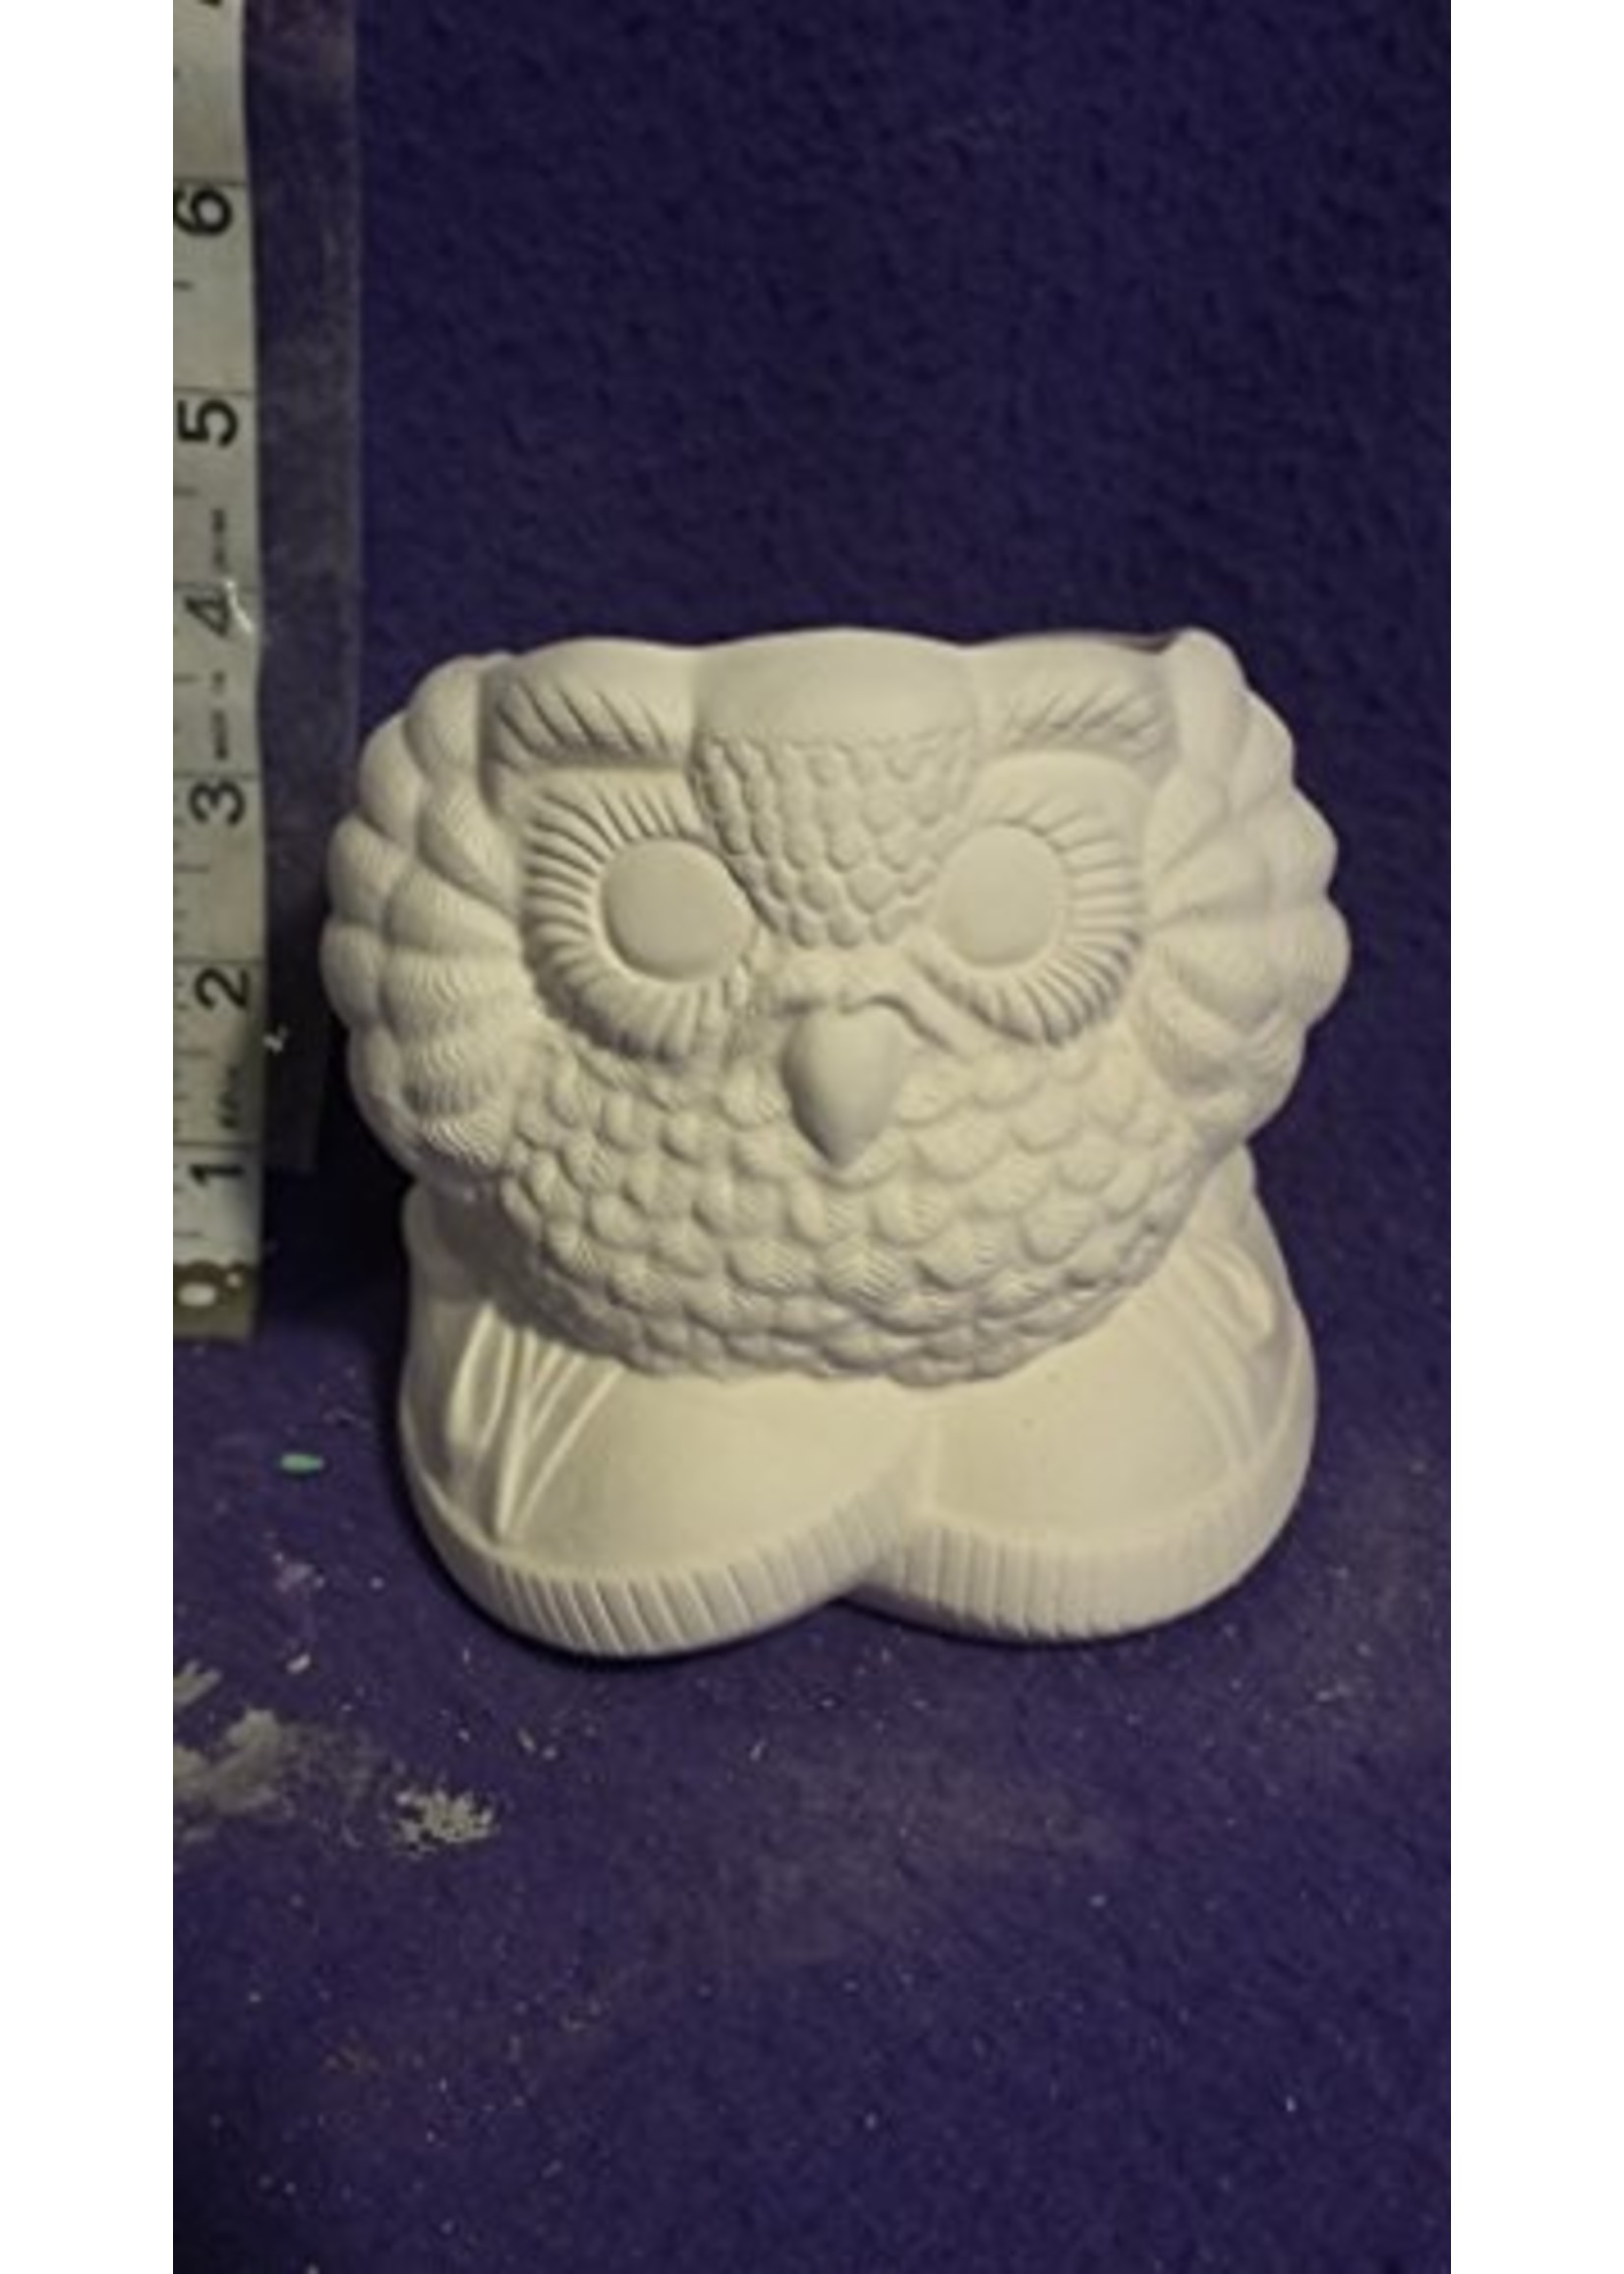 Sm Owl Planter 4 Ready to Paint Ceramic Bisque Glazed Inside 